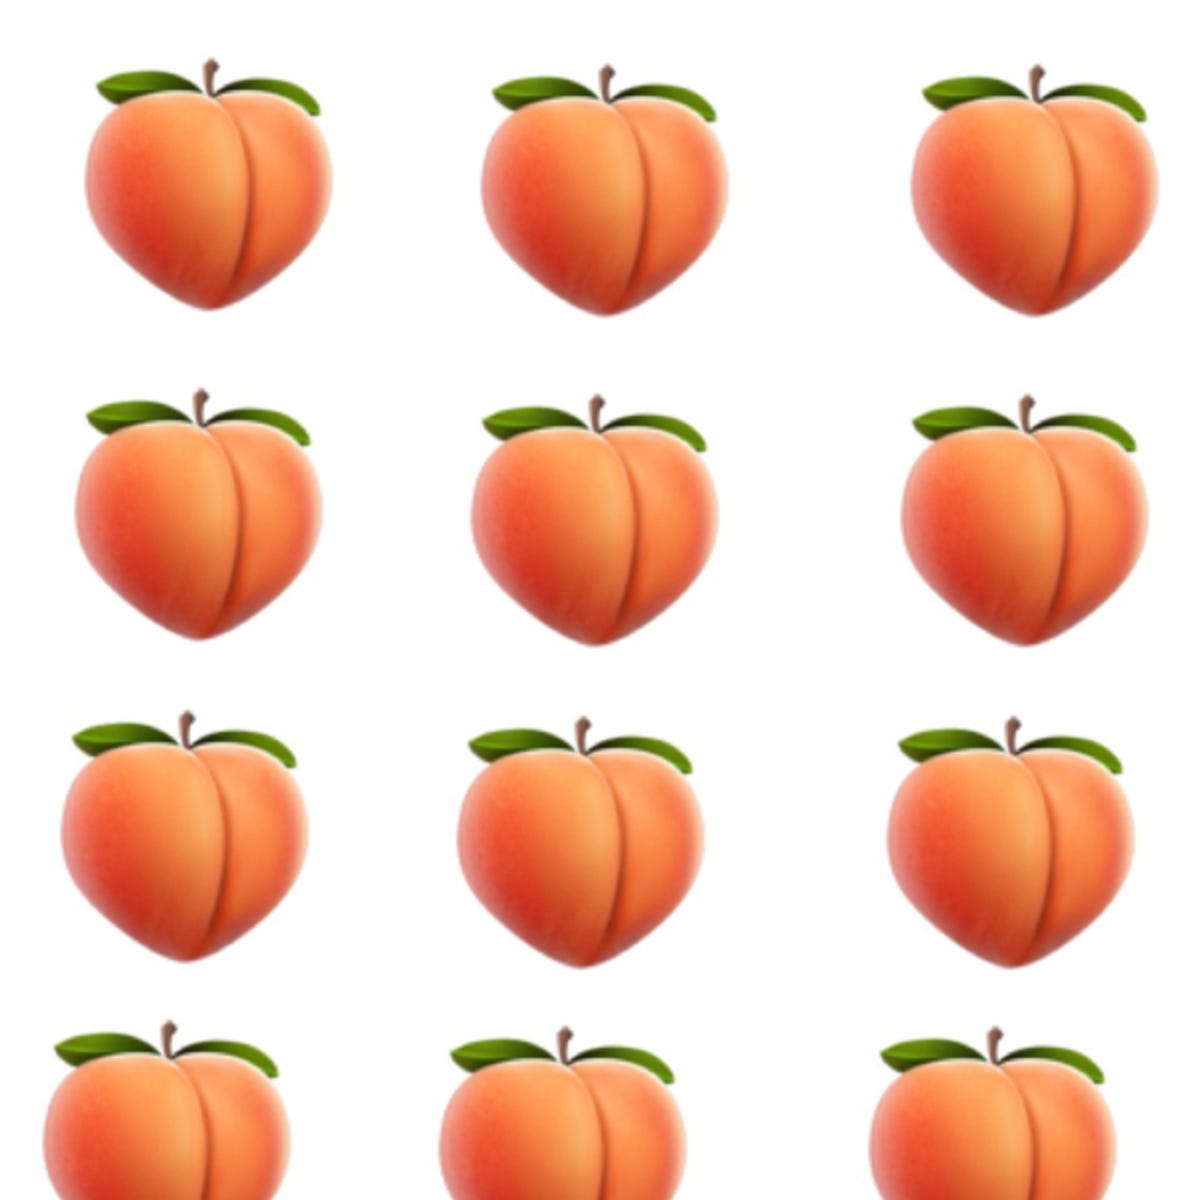 Peach Emoji Wallpapers